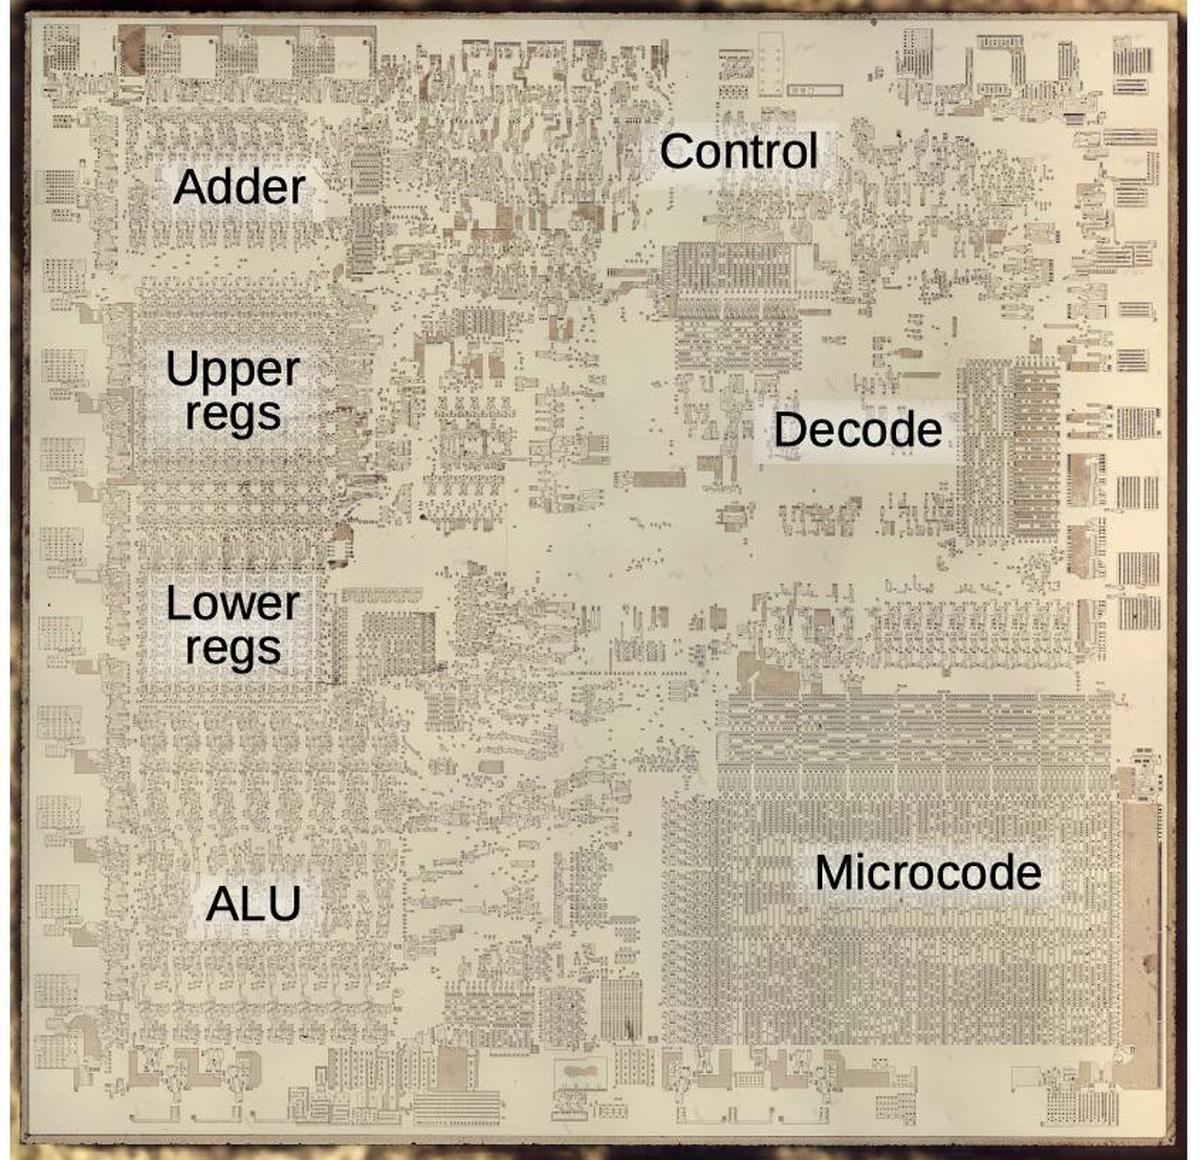 Die of the 8086 microprocessor showing main functional blocks.